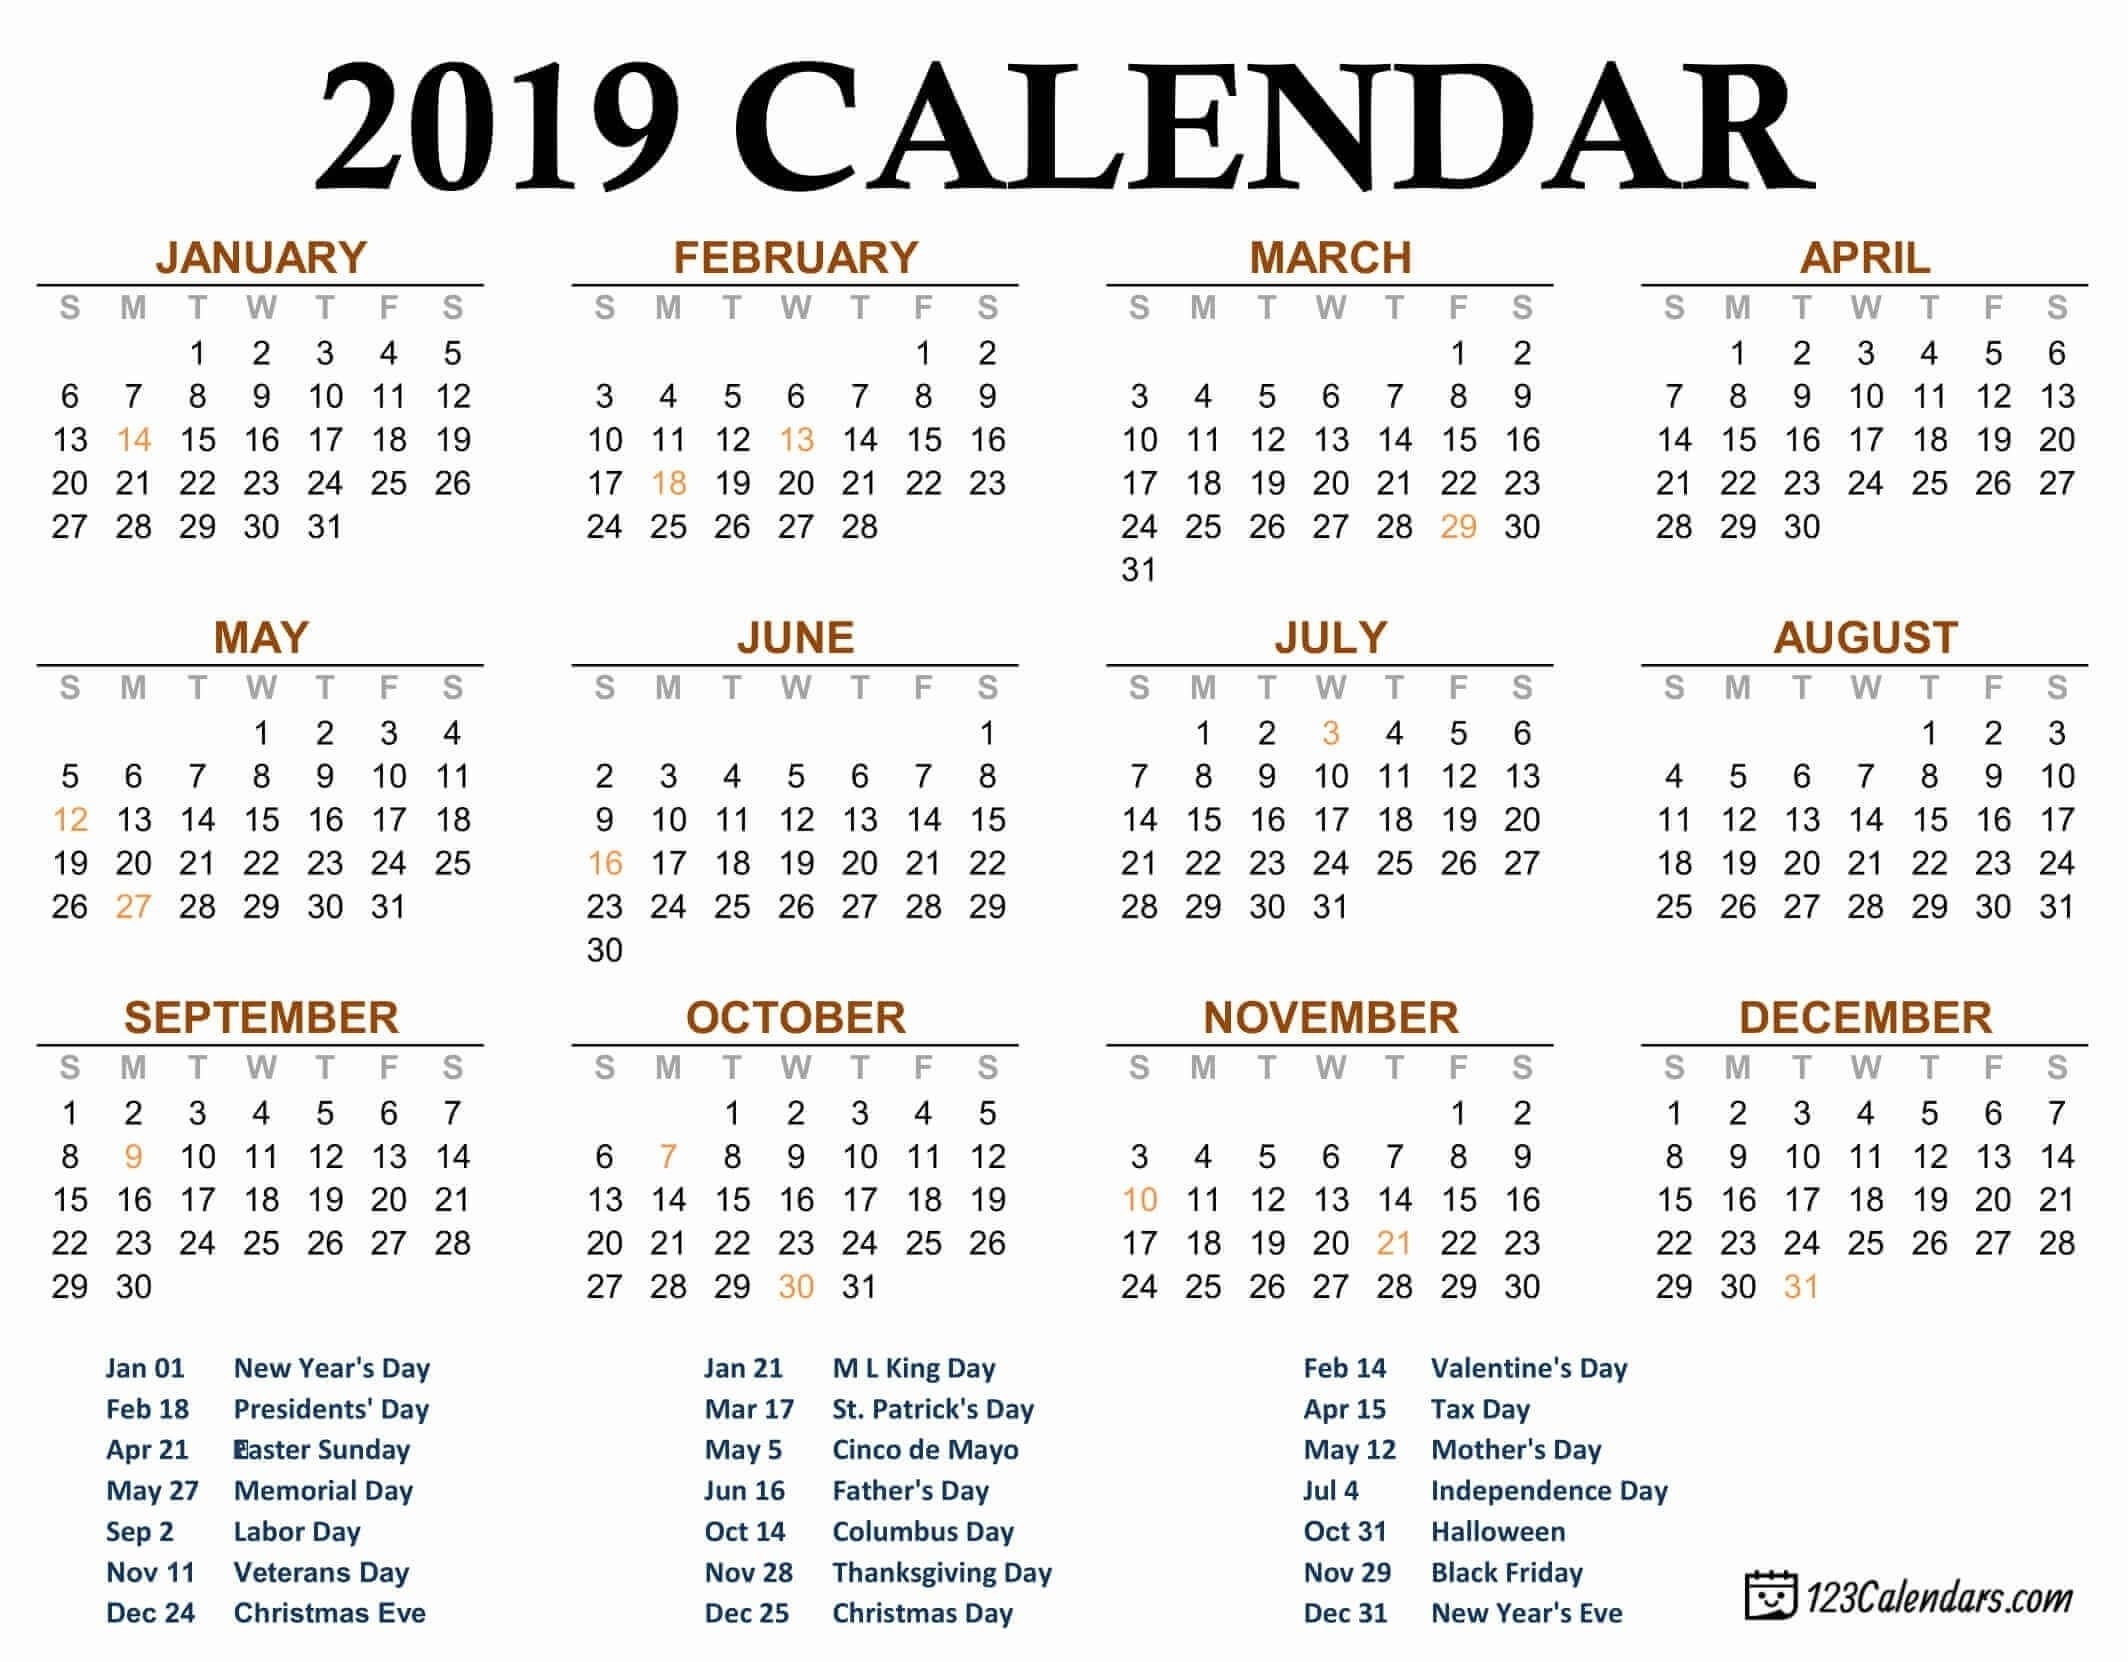 2019 Printable Calendar - 123Calendars Free Check More At